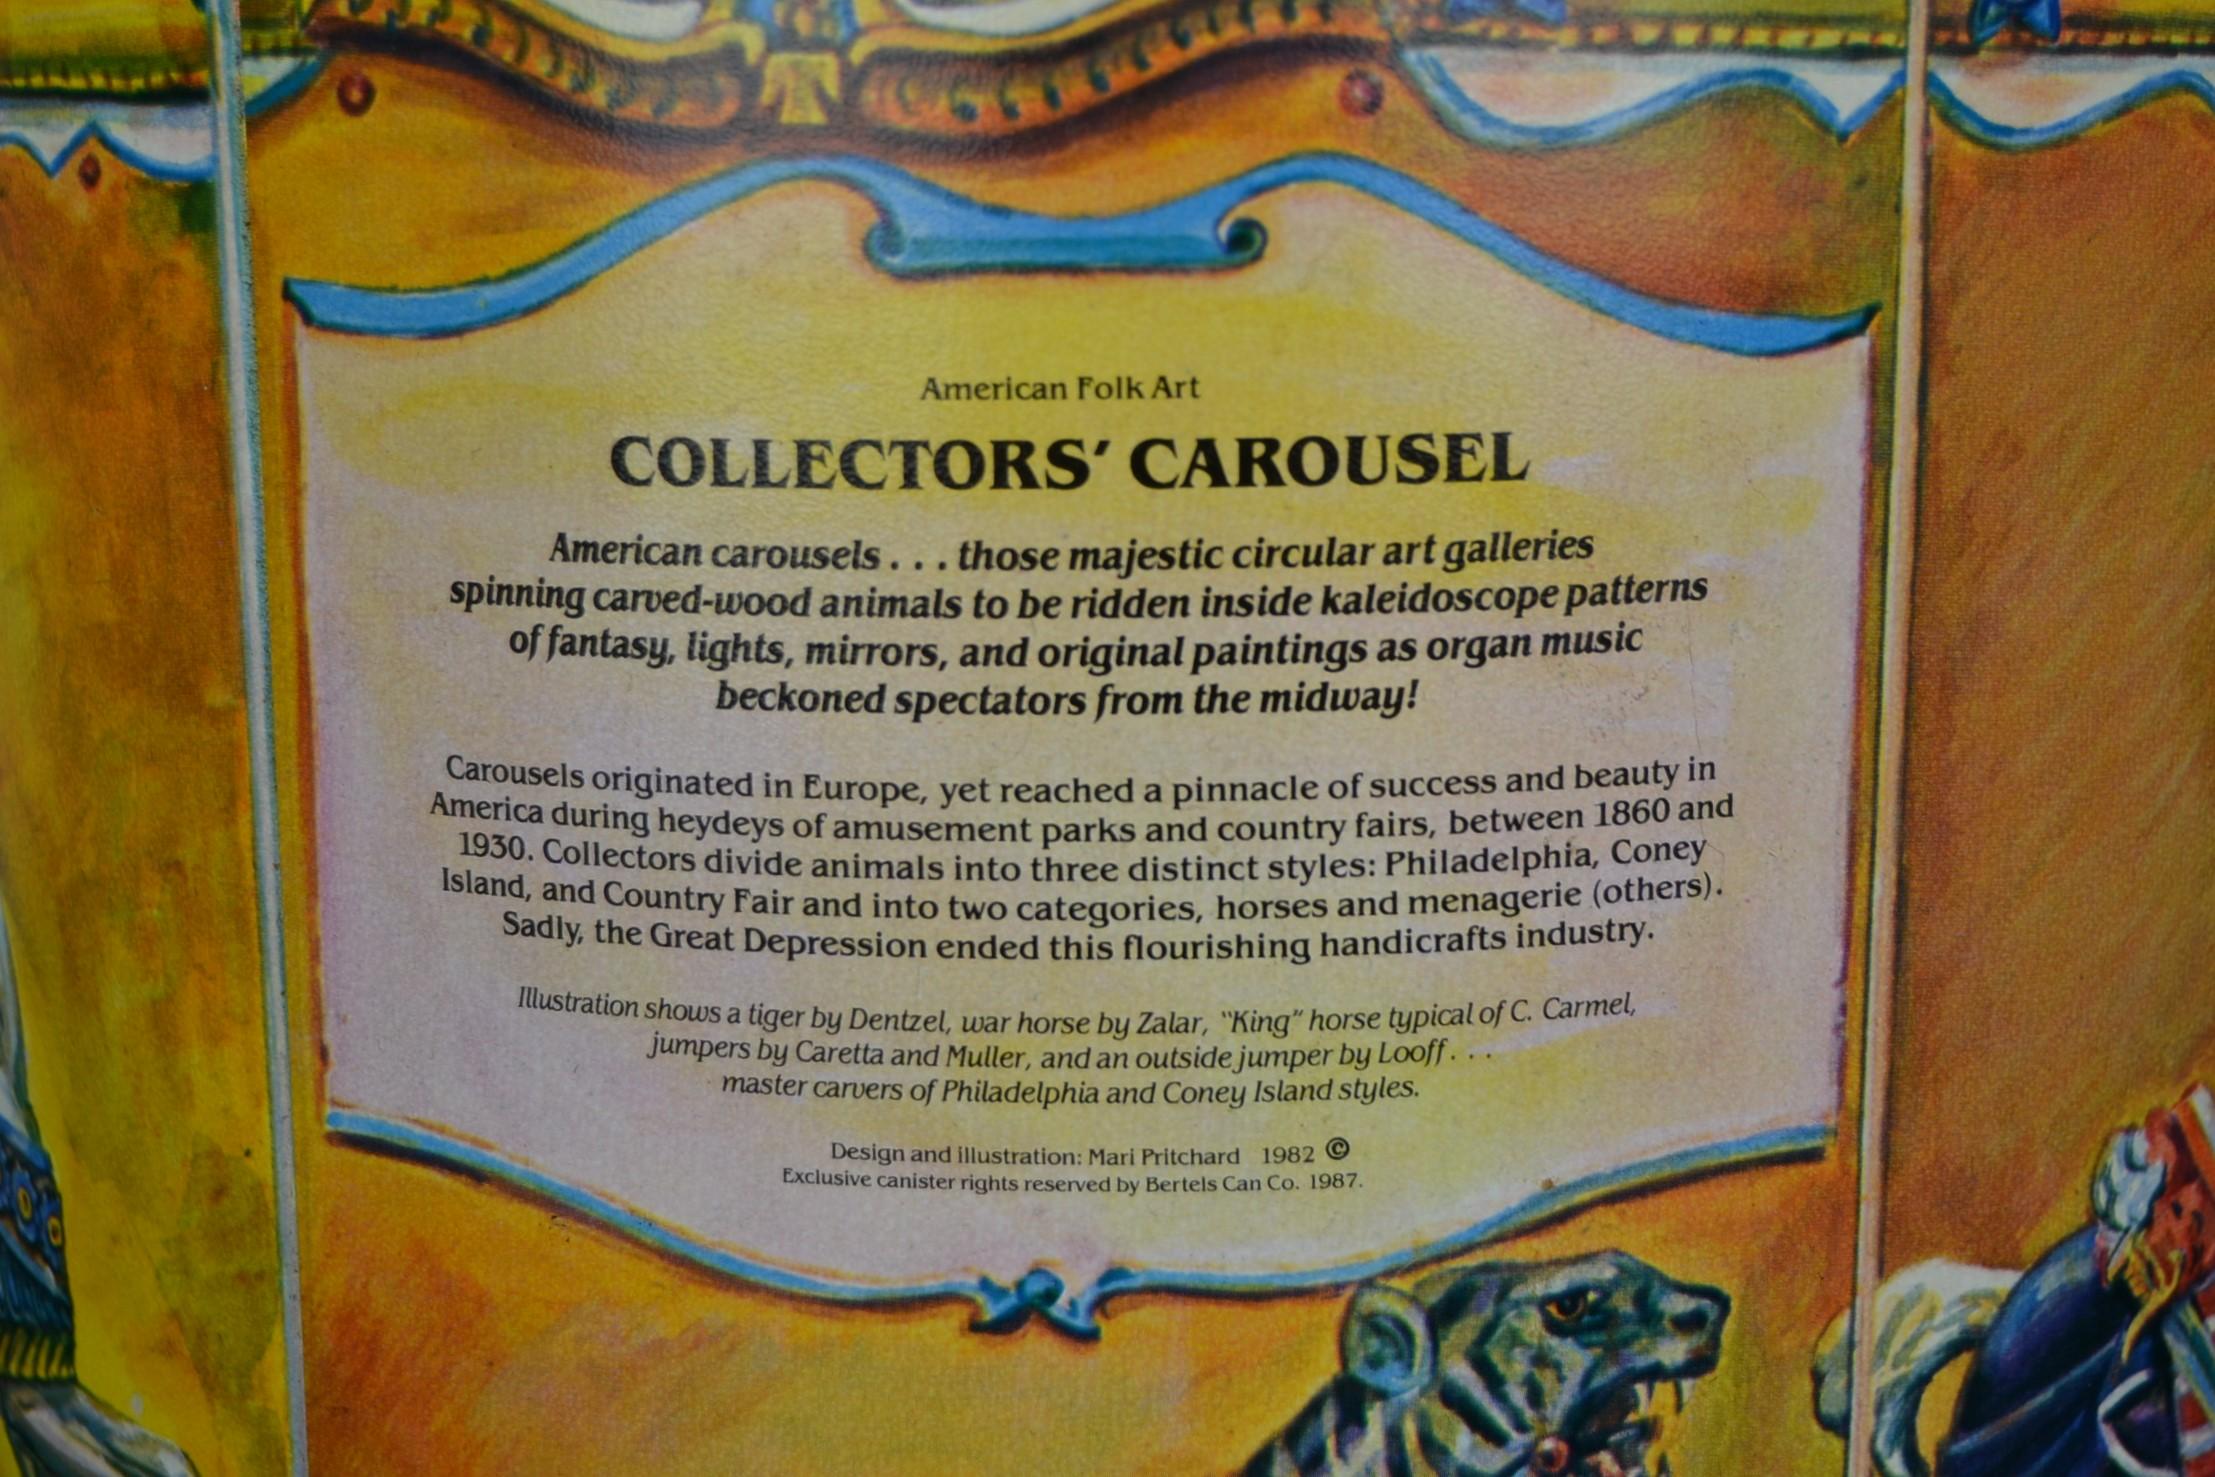 North American Collector's Carousel Tin, Mari Pritchard, 1982 For Sale